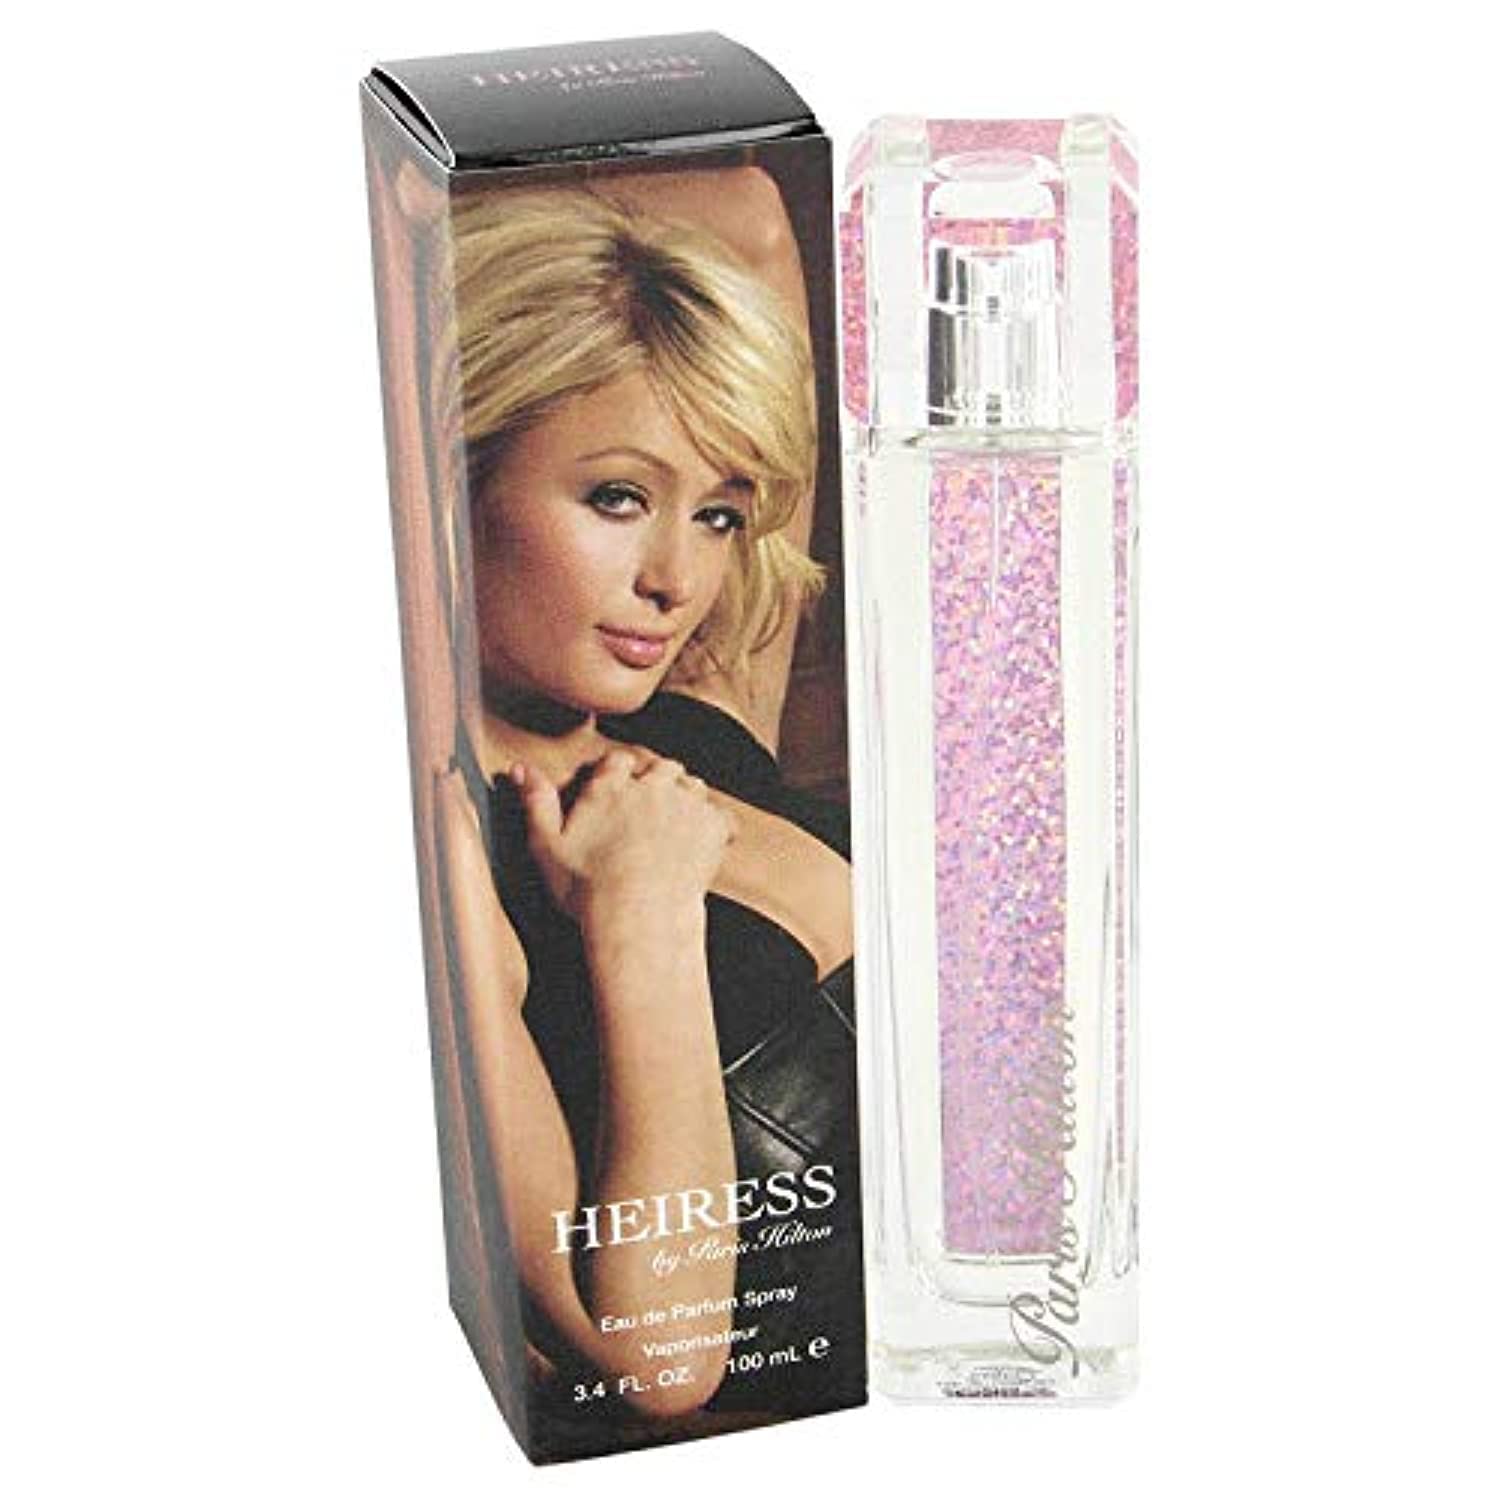 Paris Hilton 4 Piece Gift Set for Women, Heiress